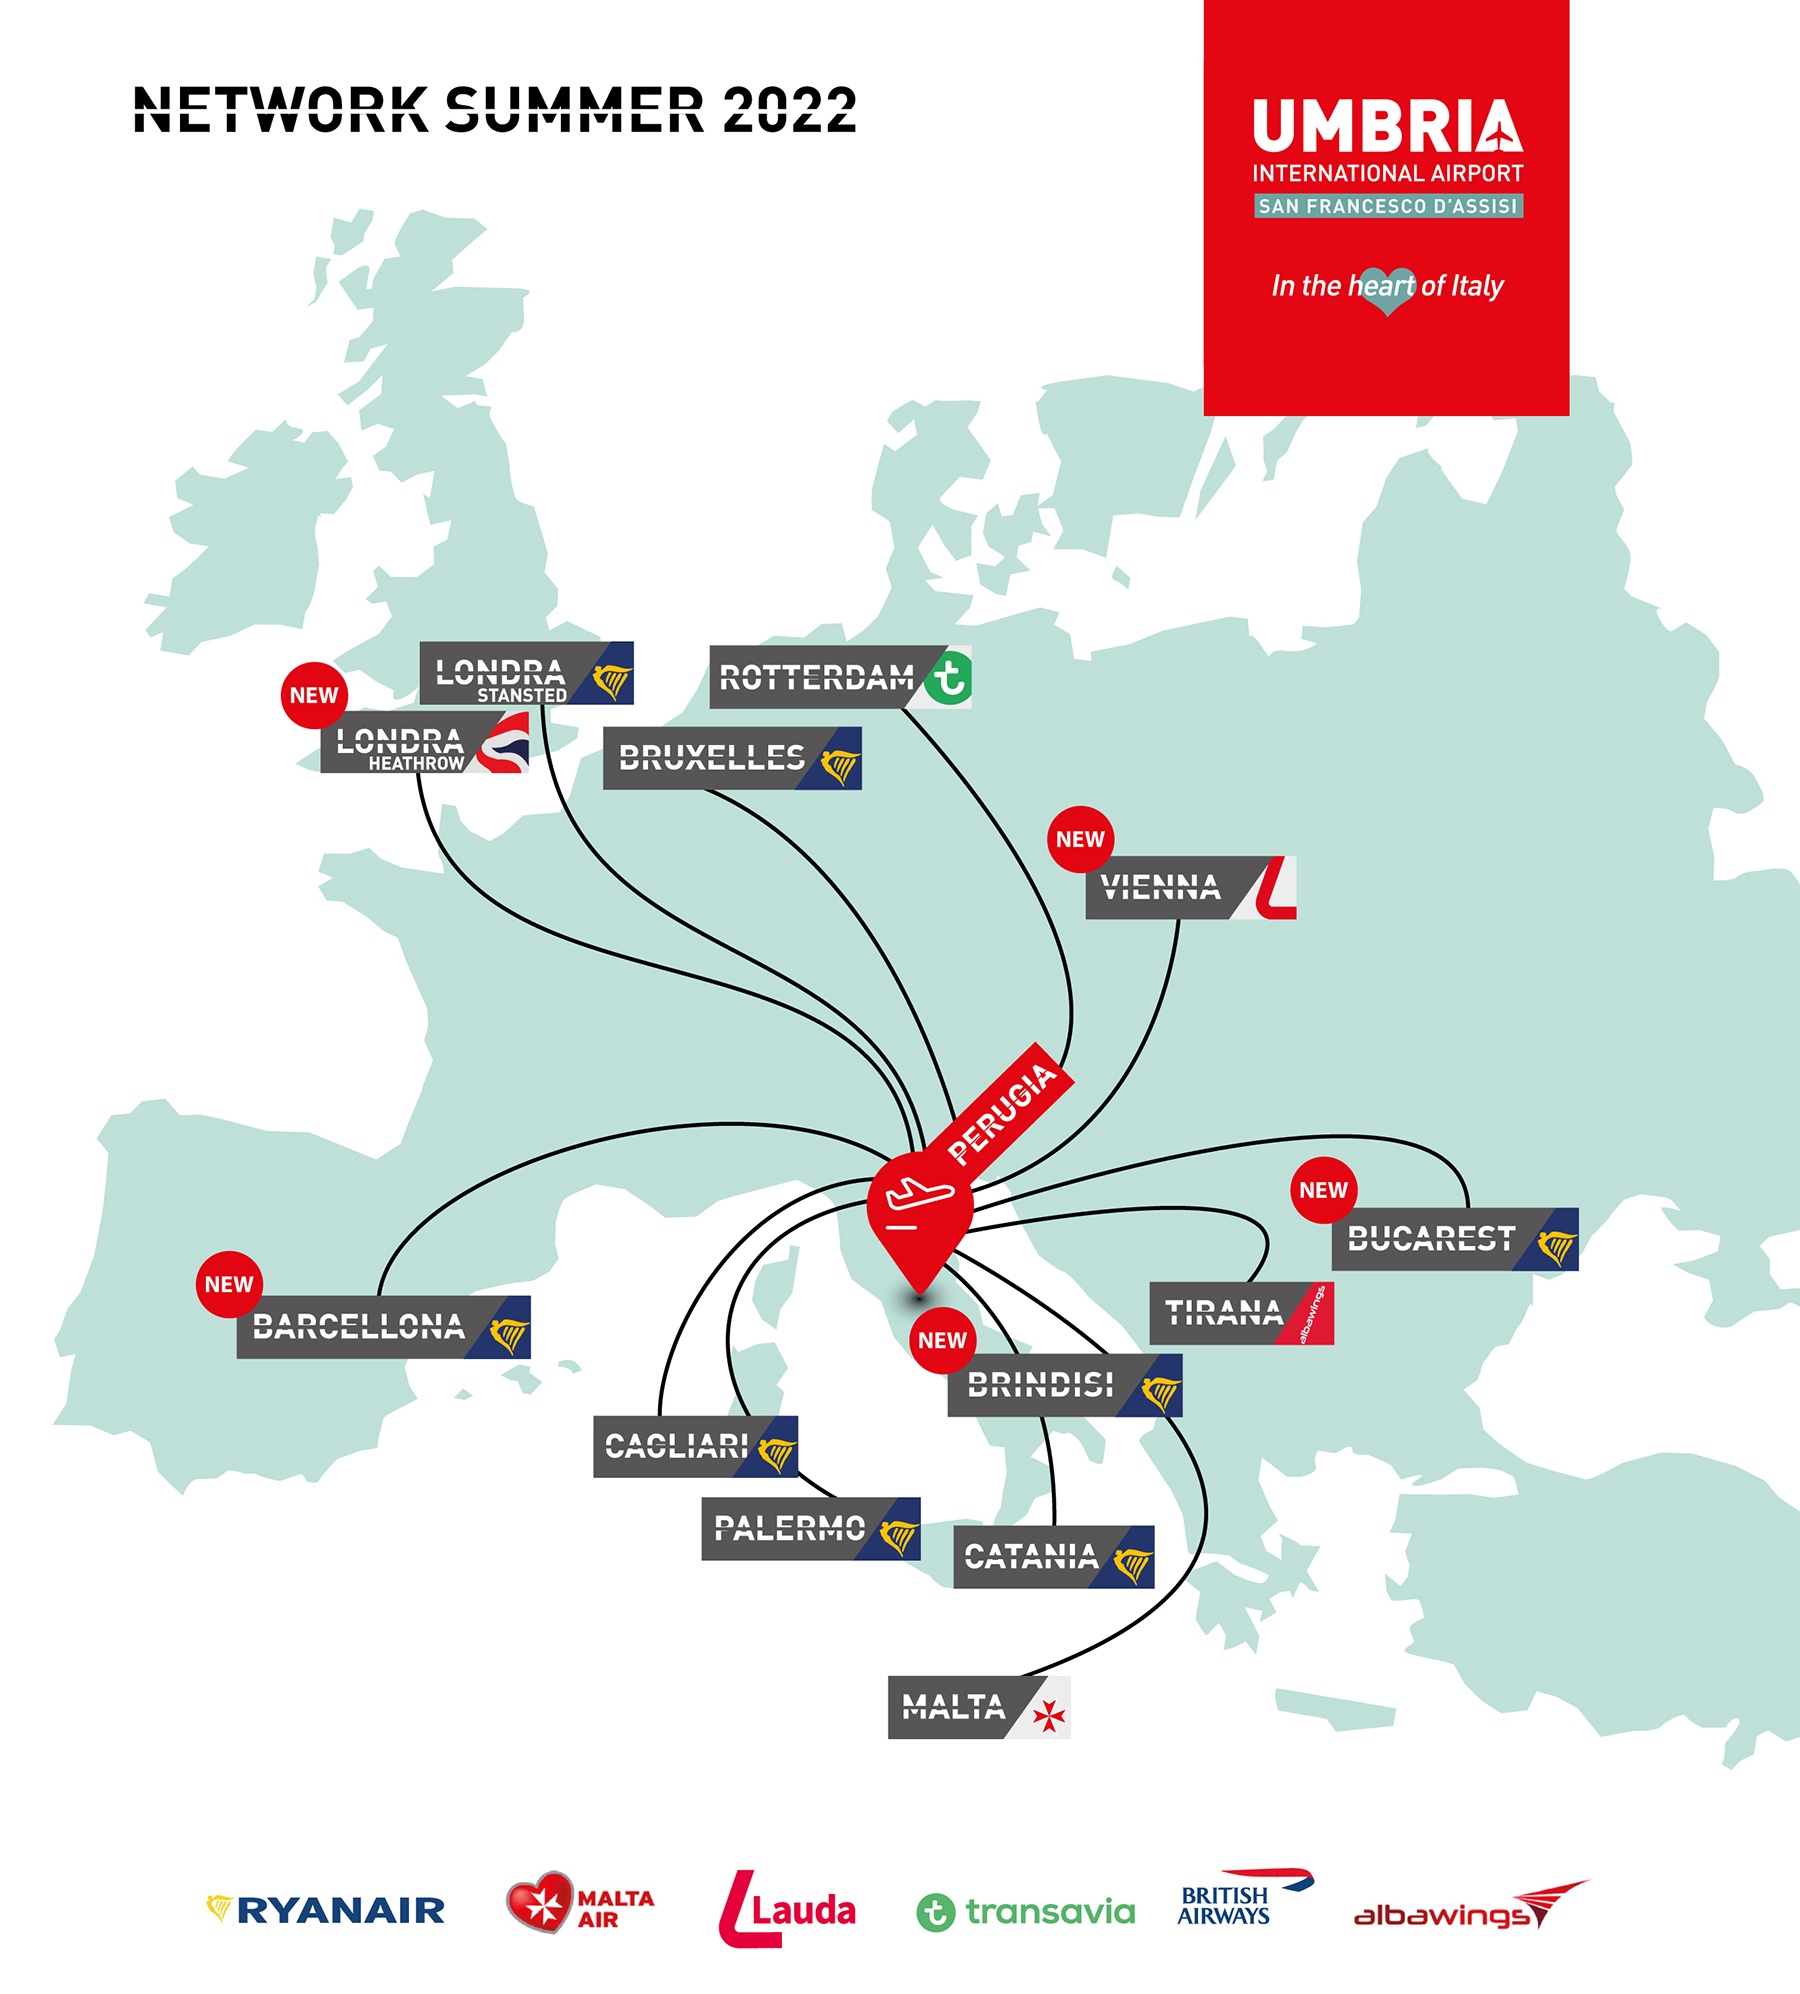 Aeroporto Umbria Network Summer 2022